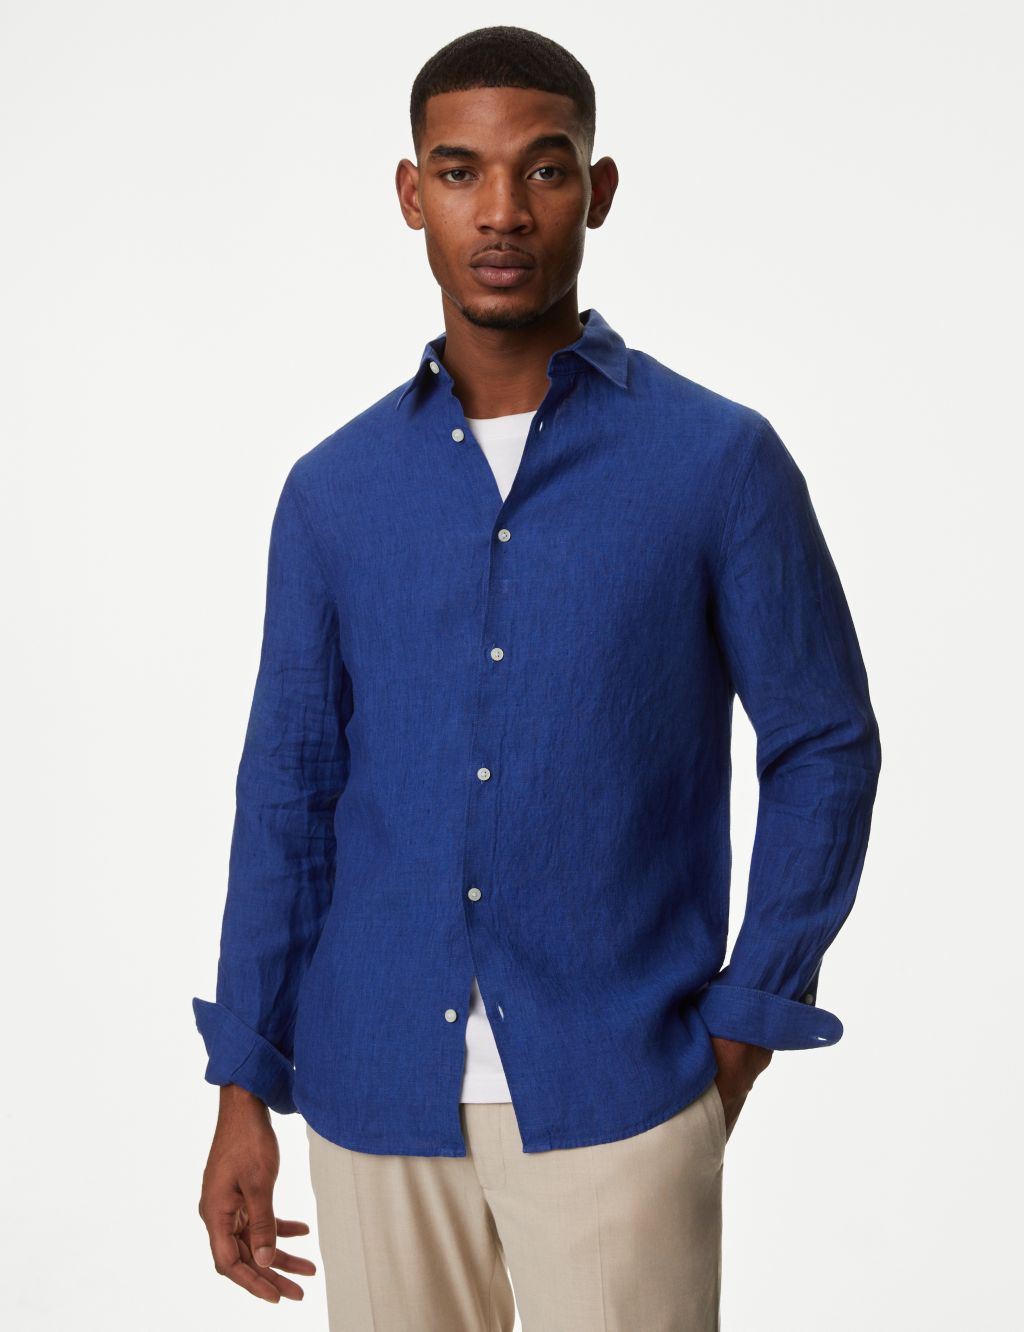 Men's Long Sleeve Cotton Linen Lapel Blazer Jacket Button Cardigan Shirts~